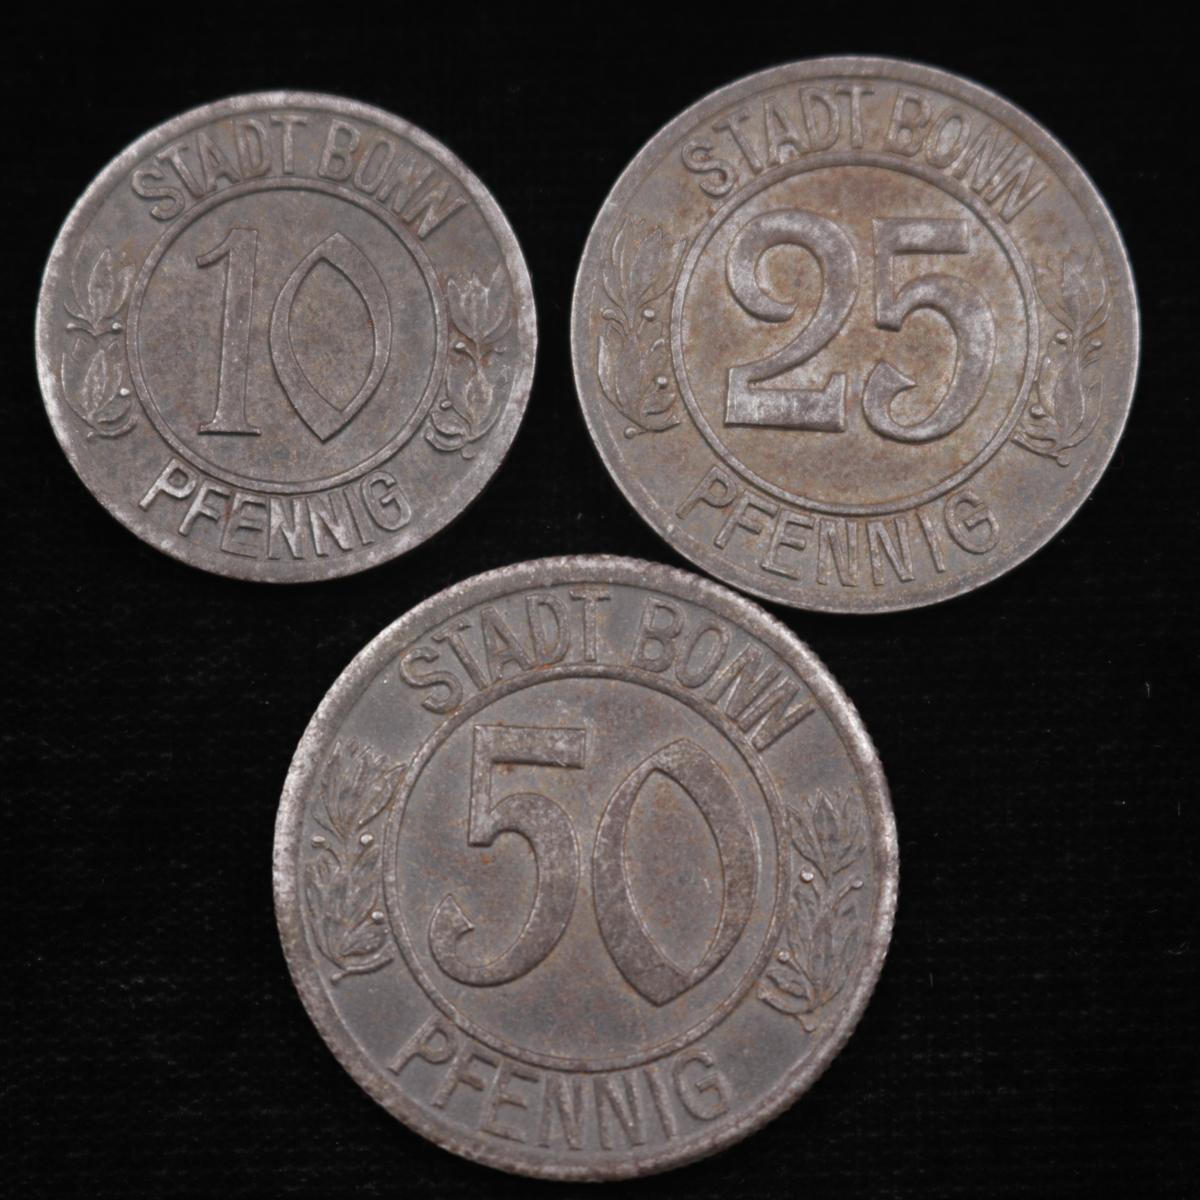 Lot of 3 1920 Bonn, Germany 10, 25 & 50 pefnnig Beethoven iron kriegsgeld tokens